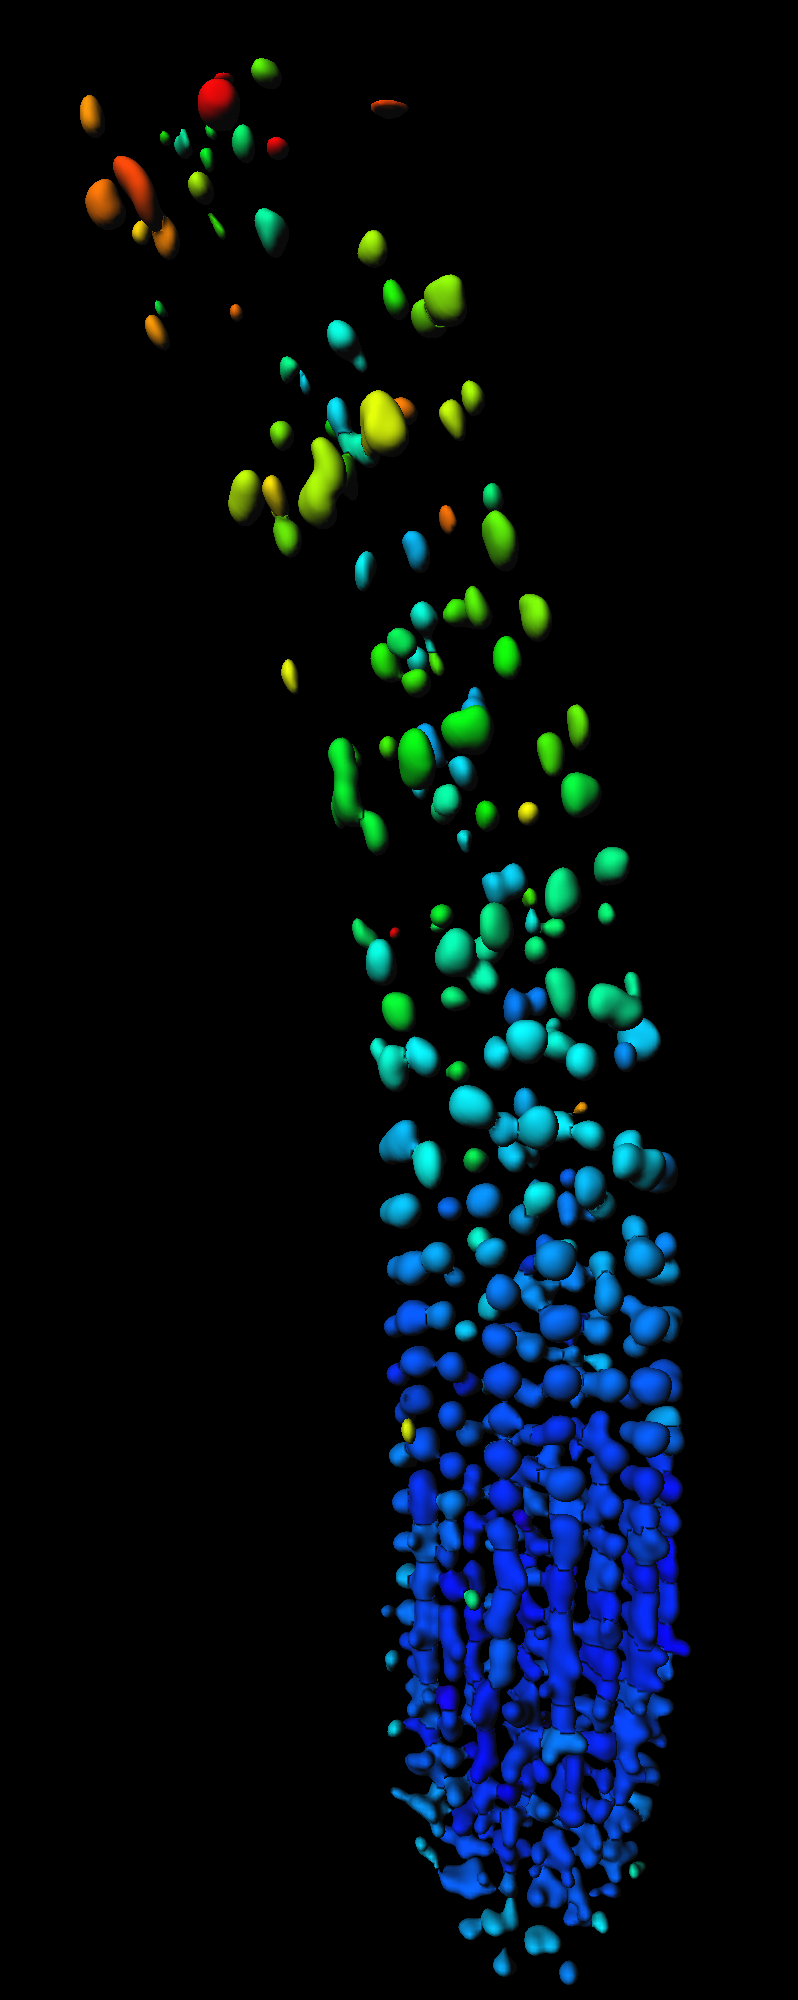 Biosensor imaging of root tip measuring GA gradient, showing a substantial GA increase in the elongation zone.